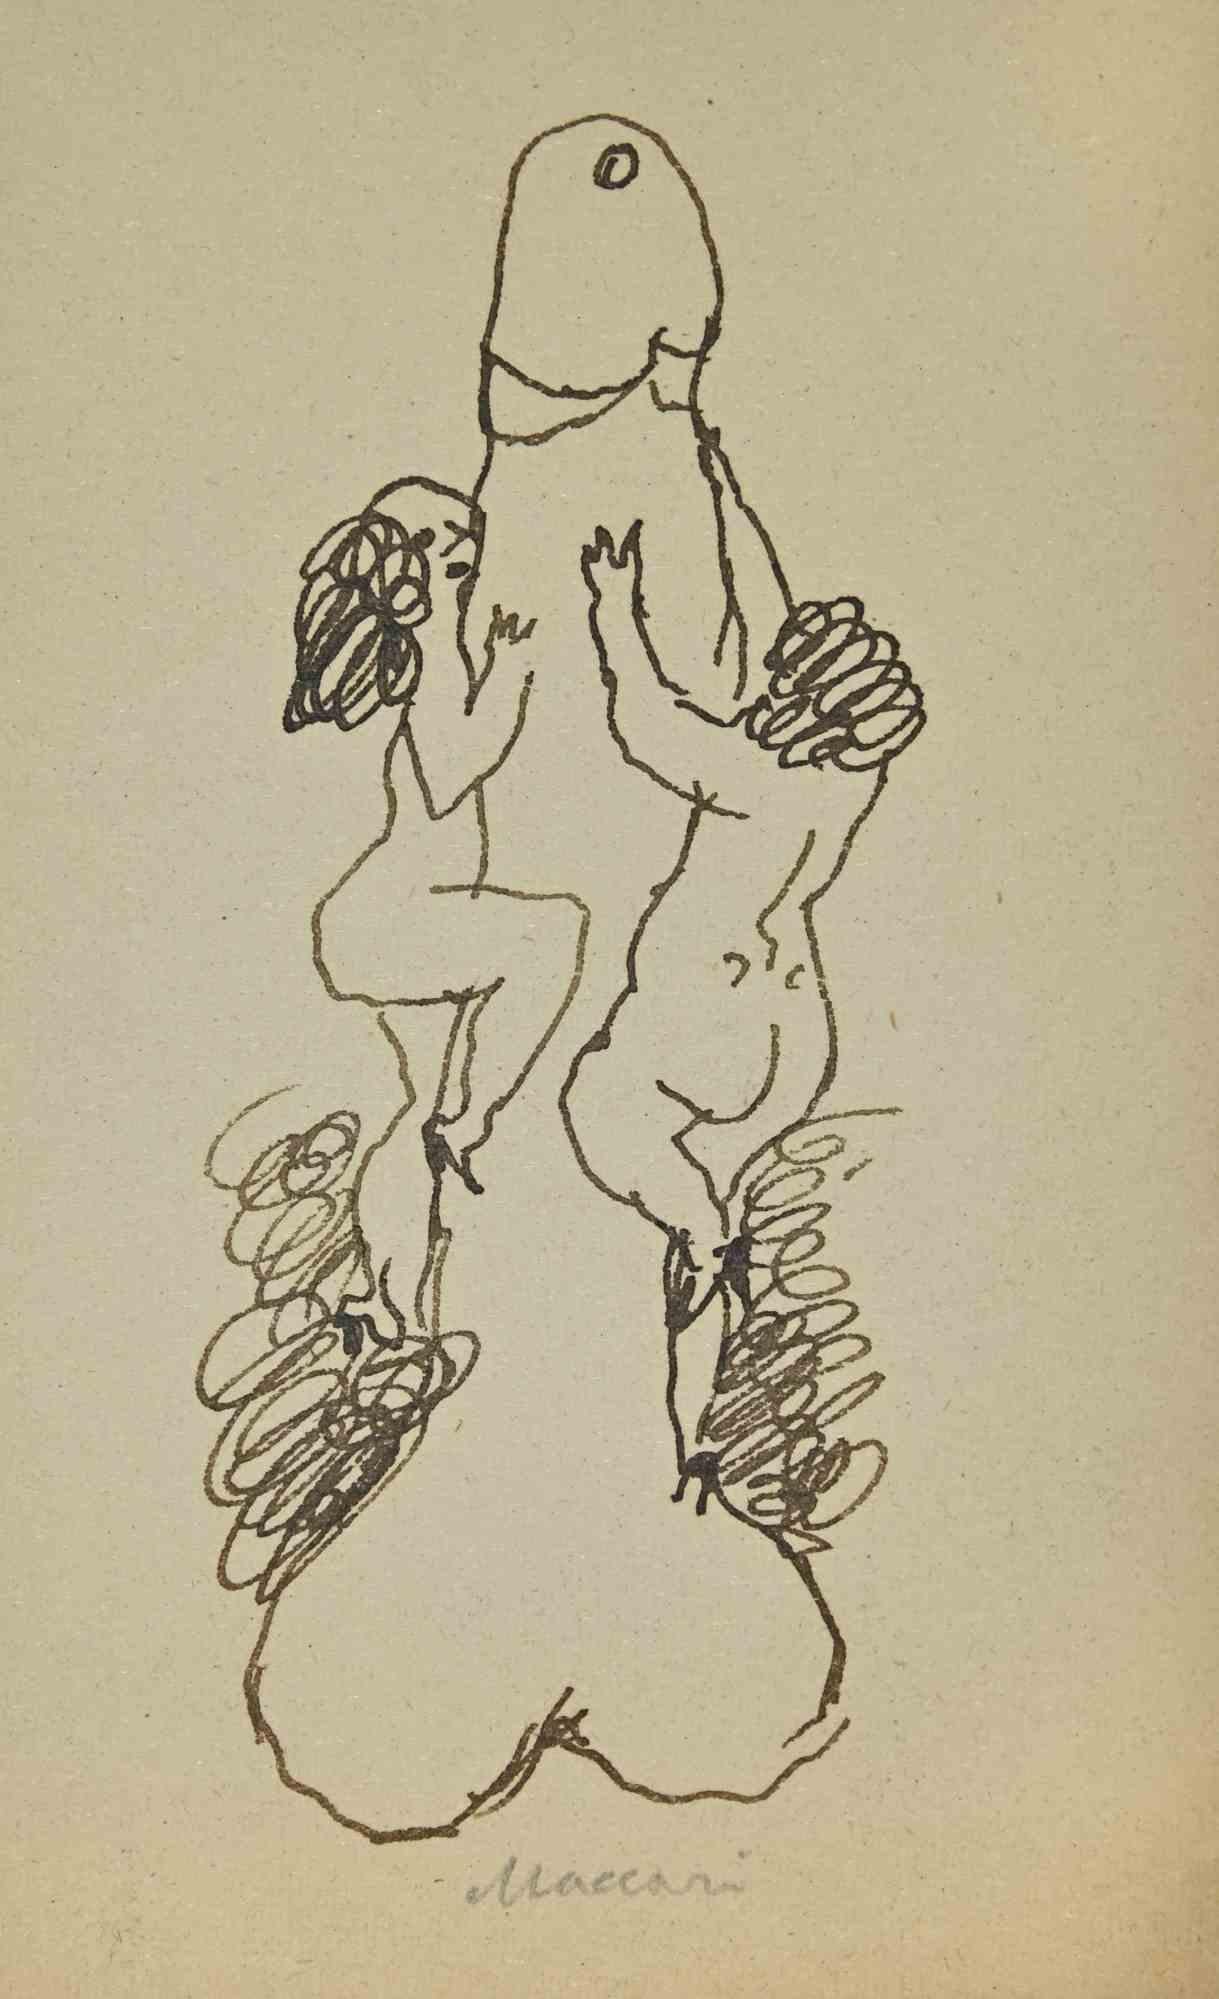 Figurative Art Mino Maccari  - The Climbers - Drawing de Mino Maccari, 1960 environ